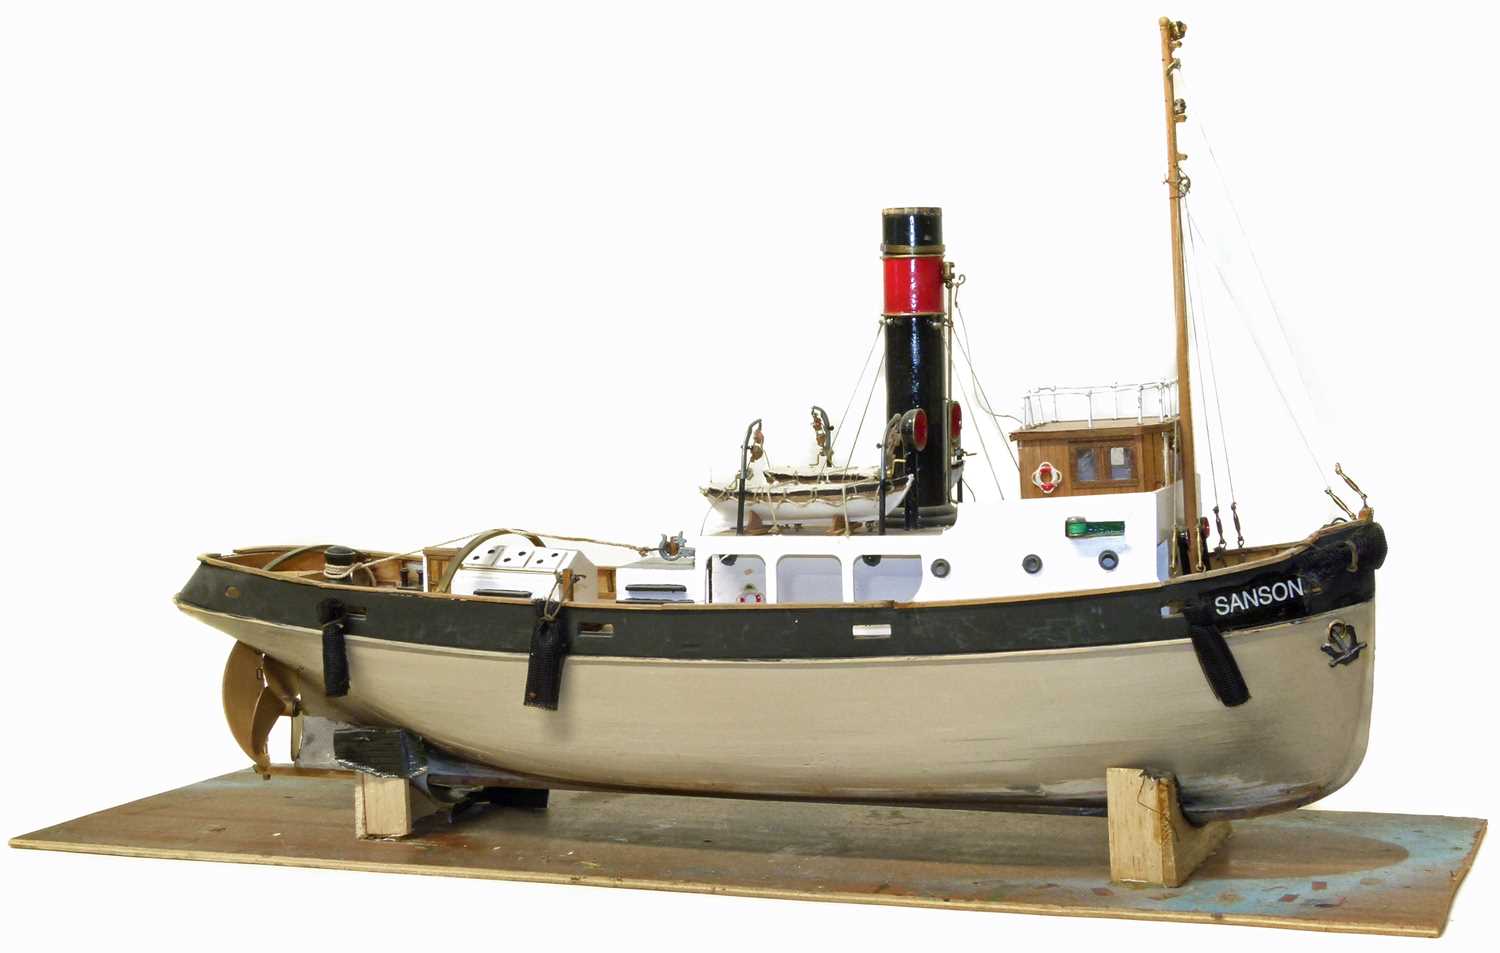 Lot 59 - Scale model of a tug boat 'Sanson'.